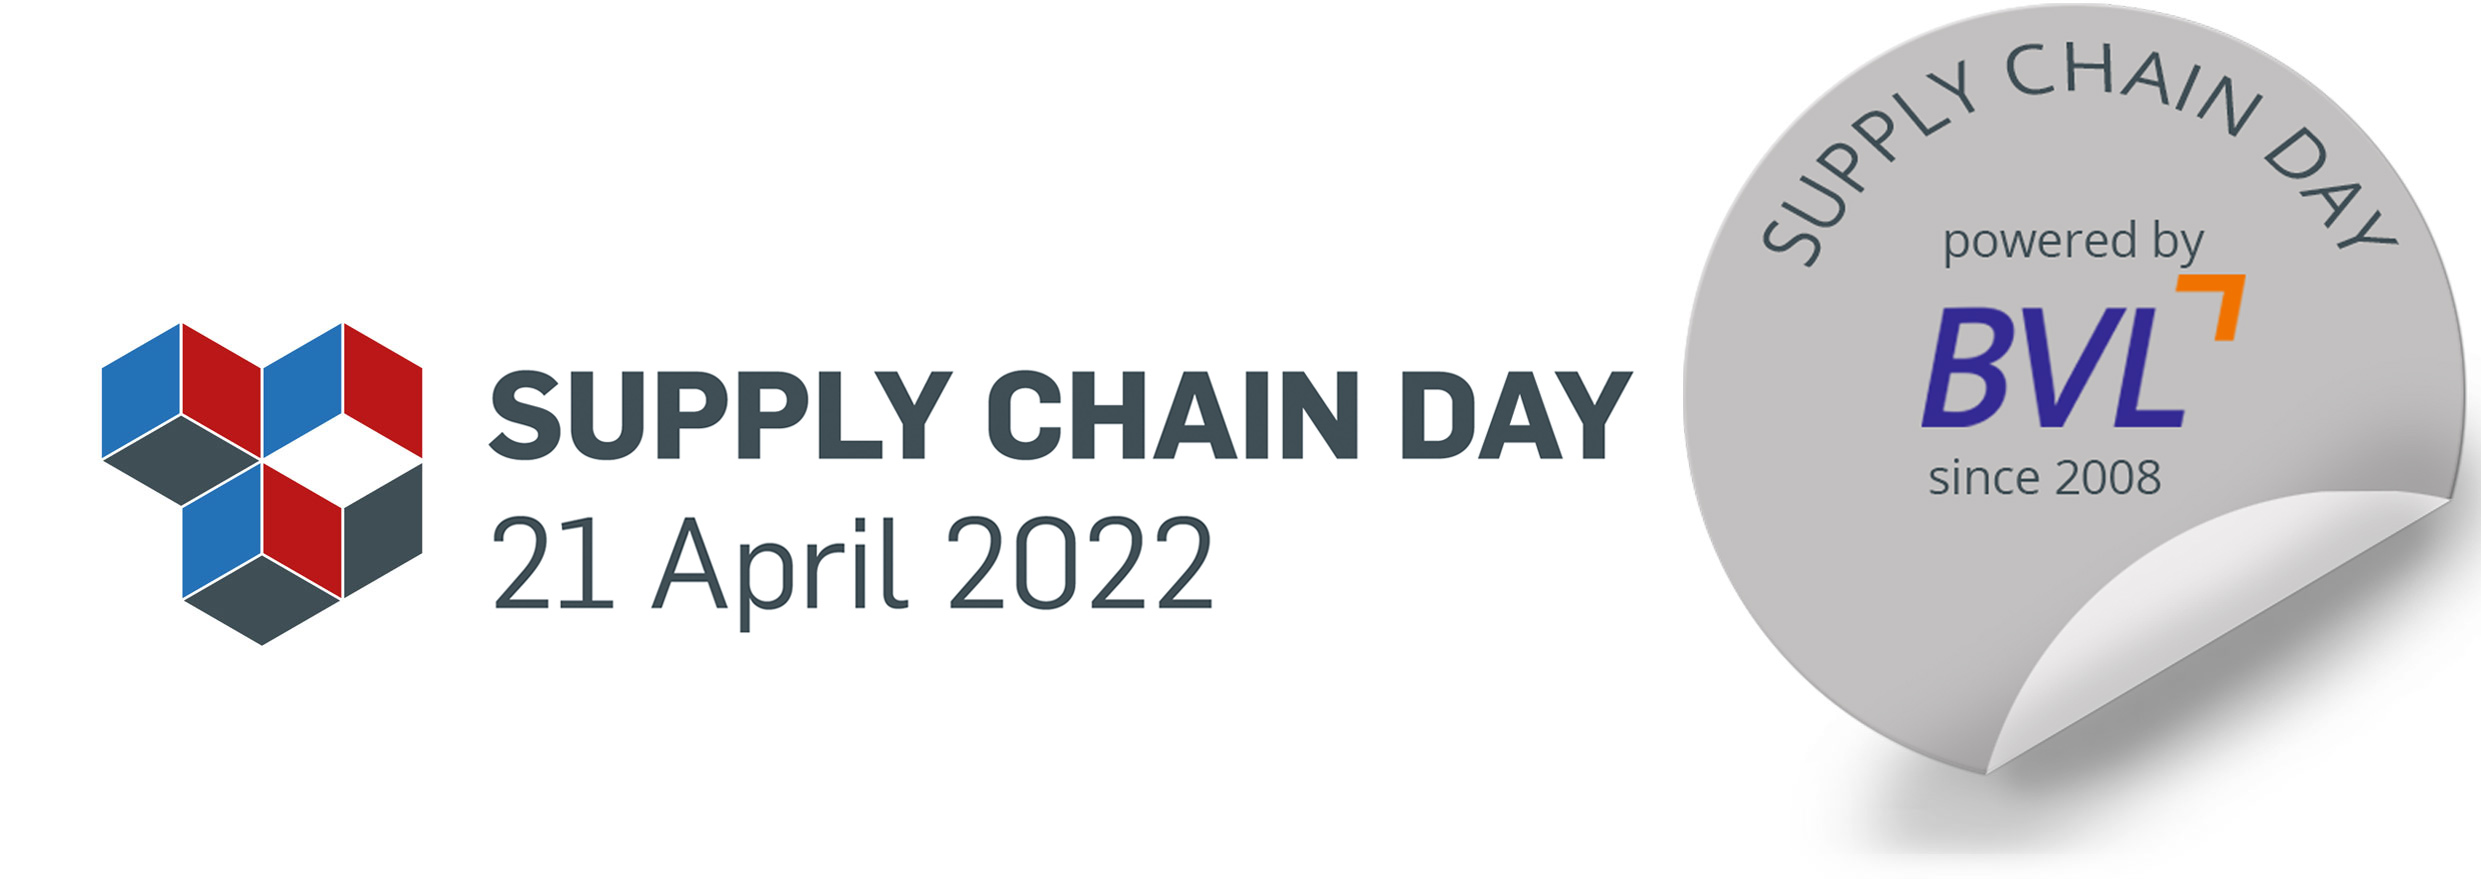 Supply Chain Day 2022